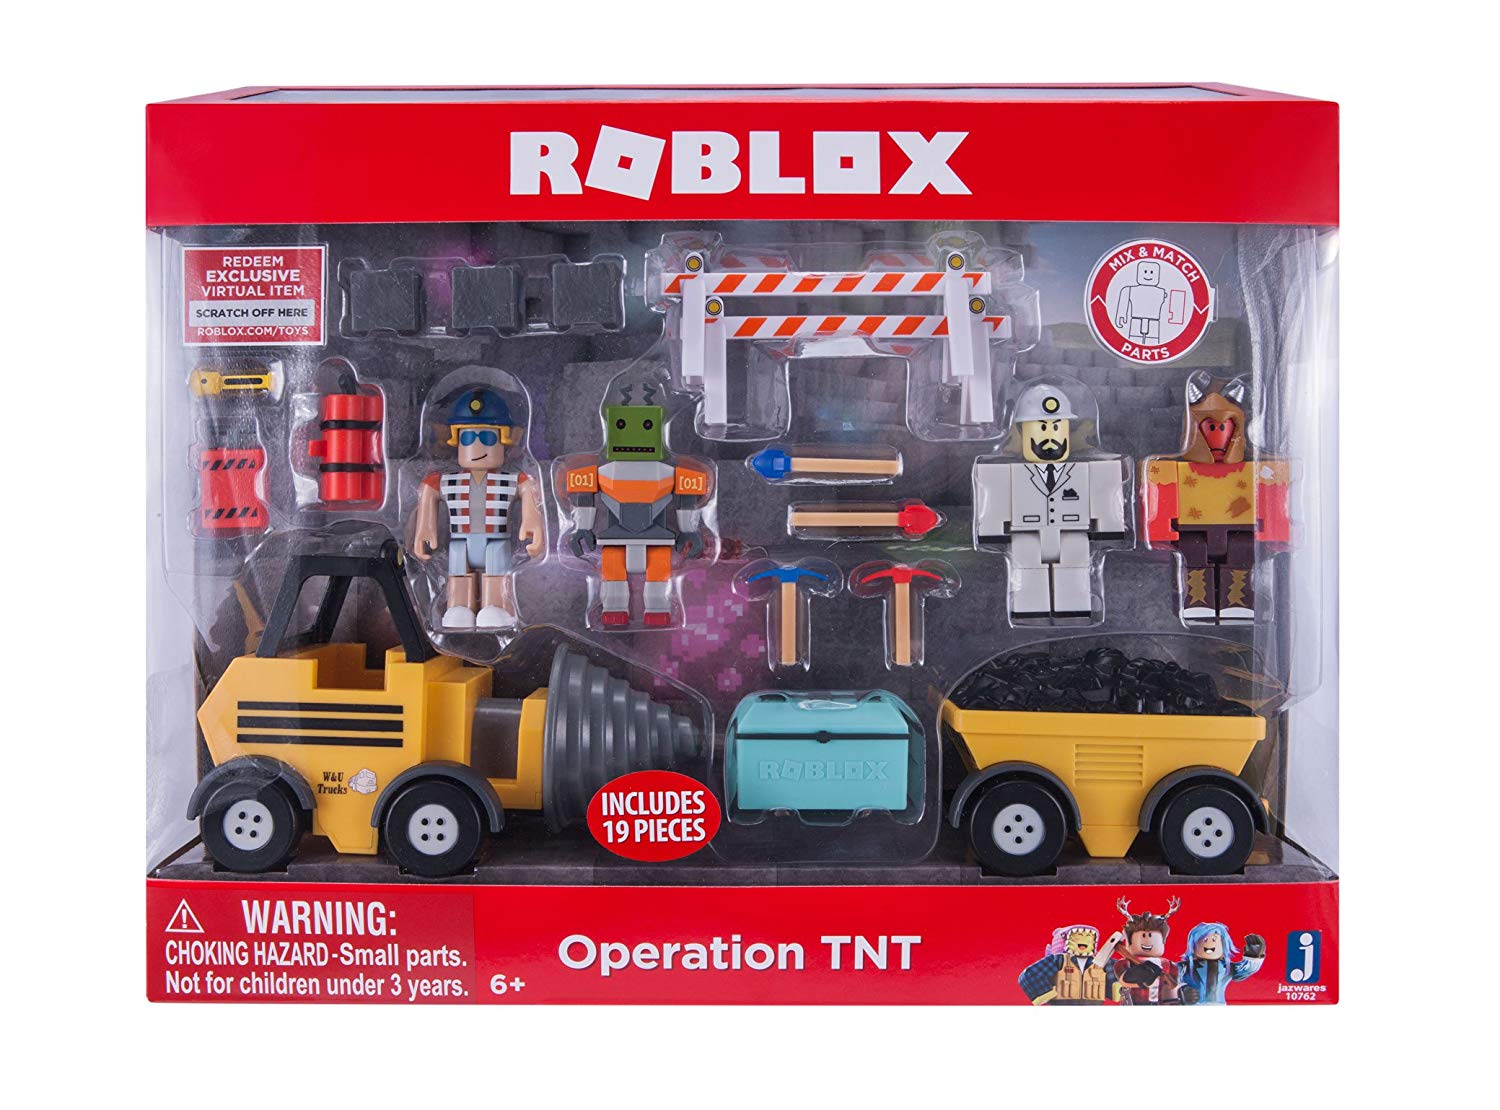 15 Best Roblox Toys The Ultimate List 2021 Heavy Com - roblox jailbreak crime boss car